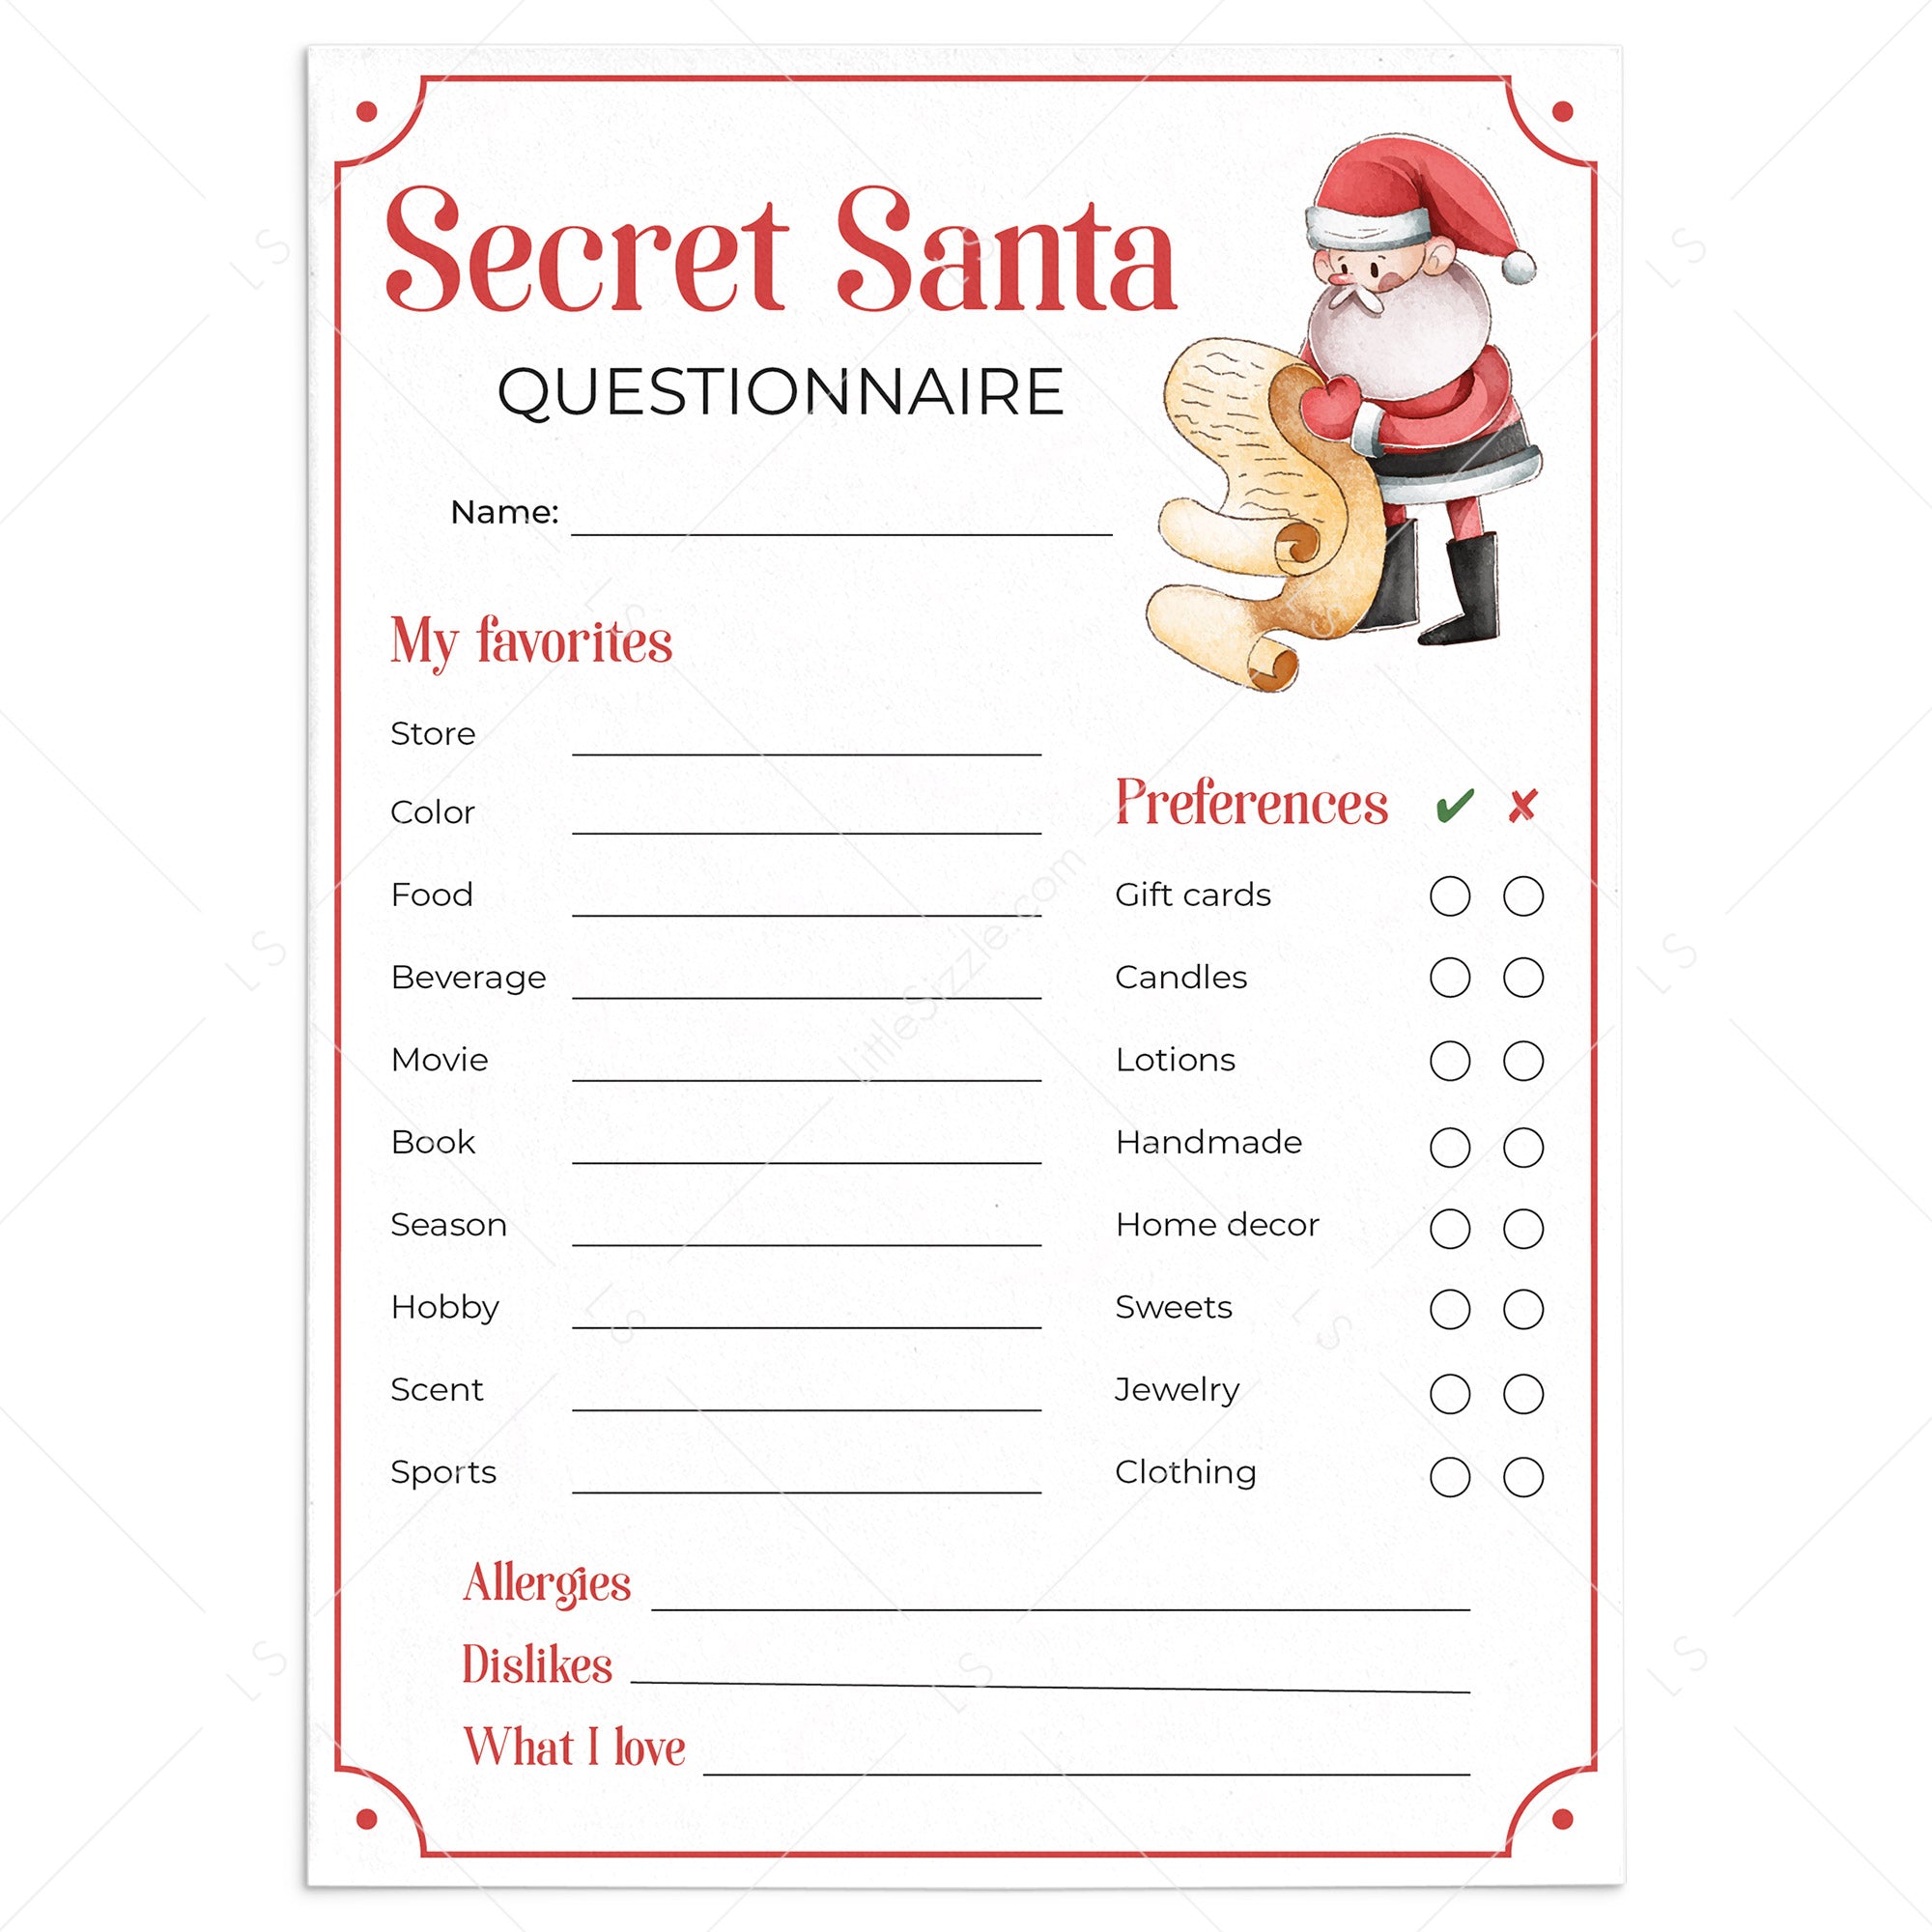 free-printable-secret-santa-questionnaire-form-printable-templates-free